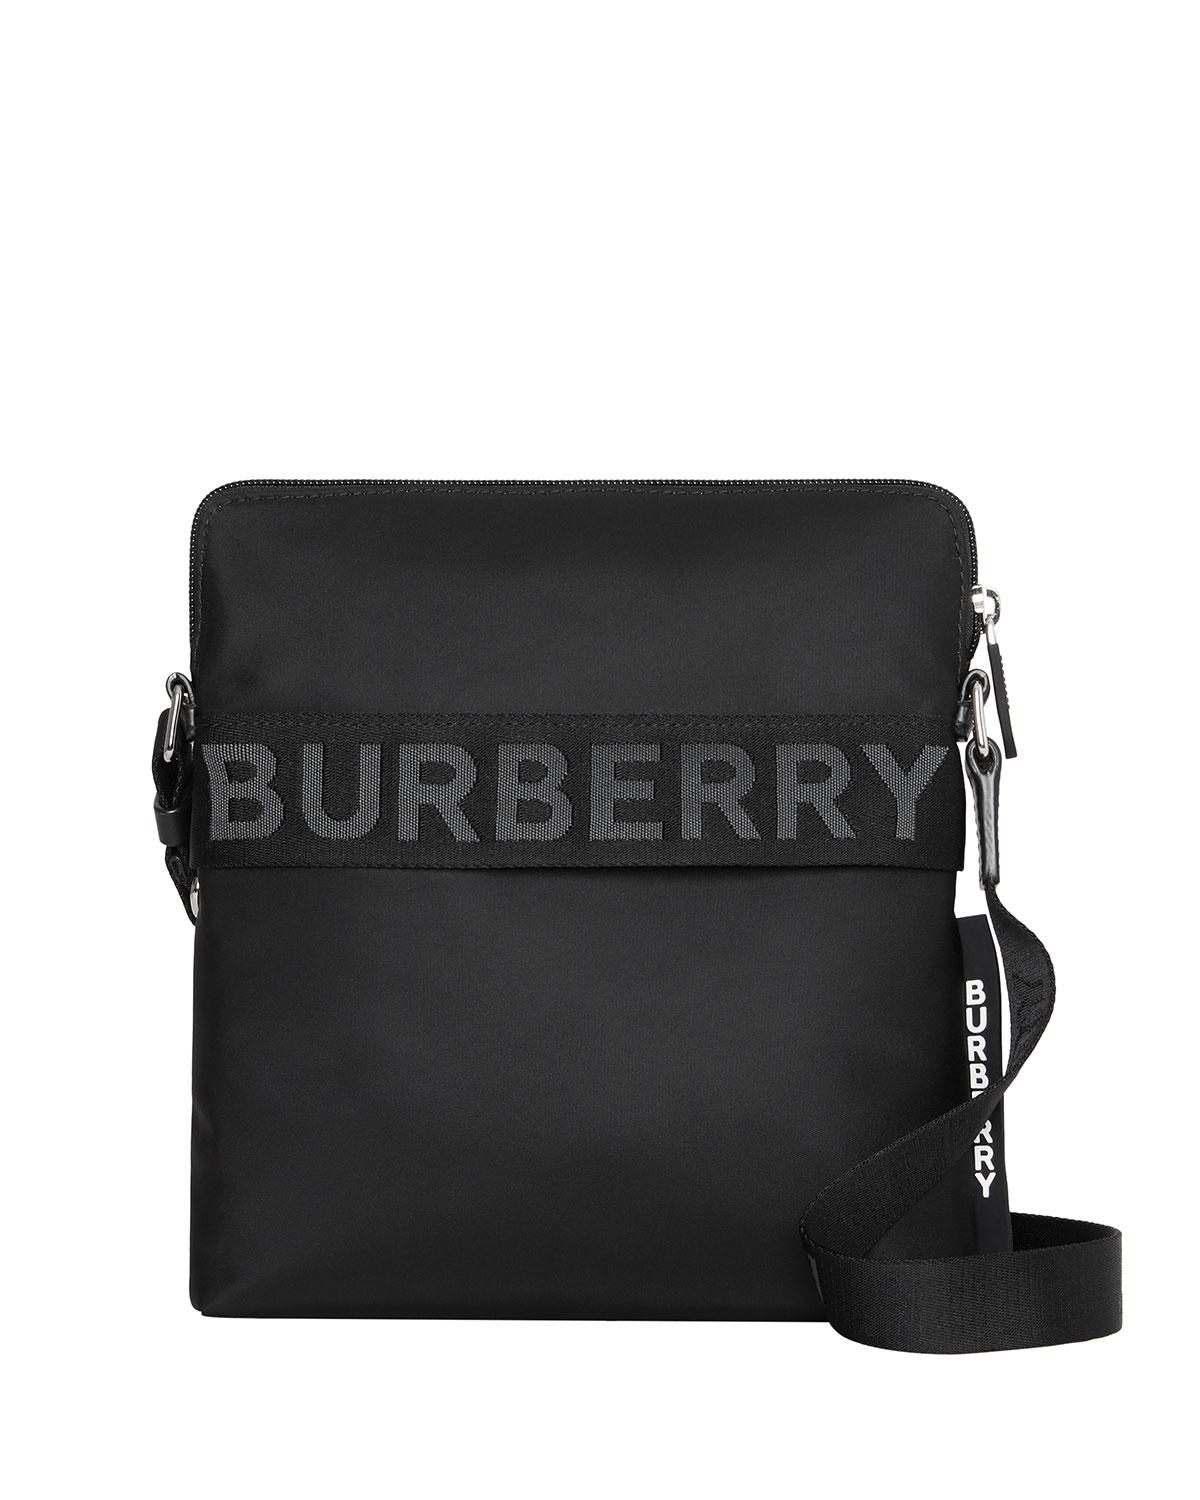 burberry cross bag